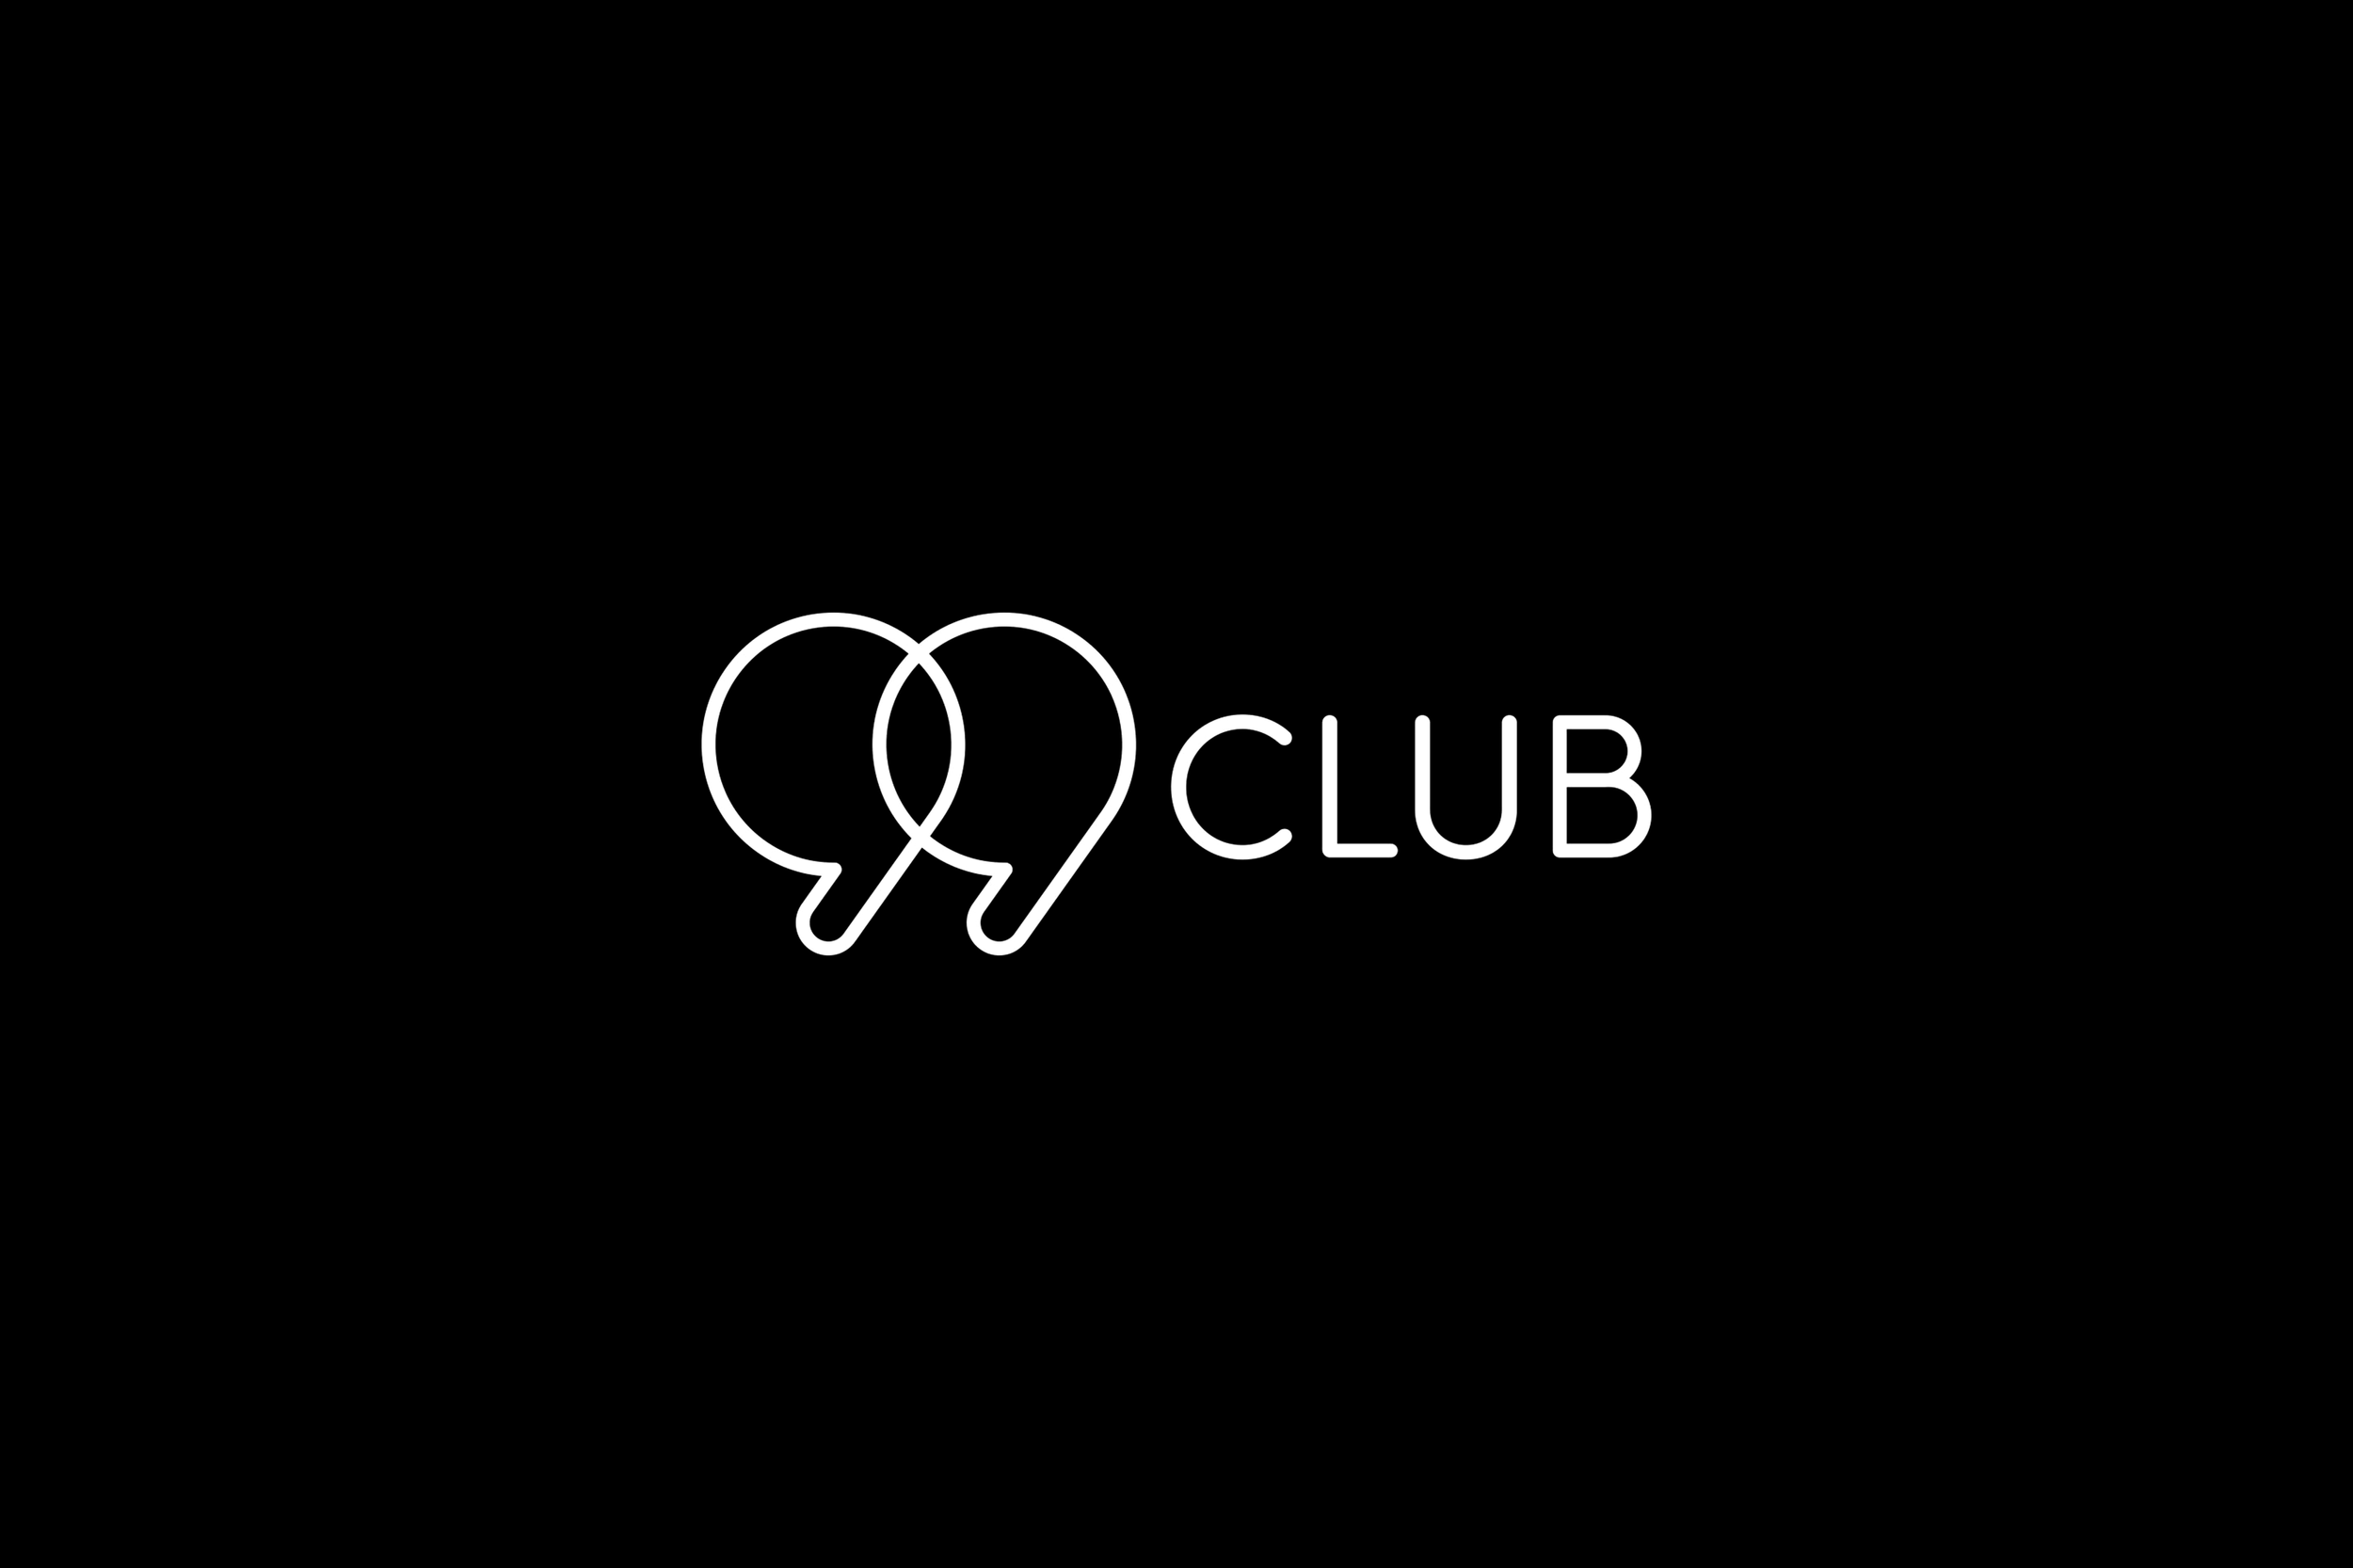 99club-logo.png